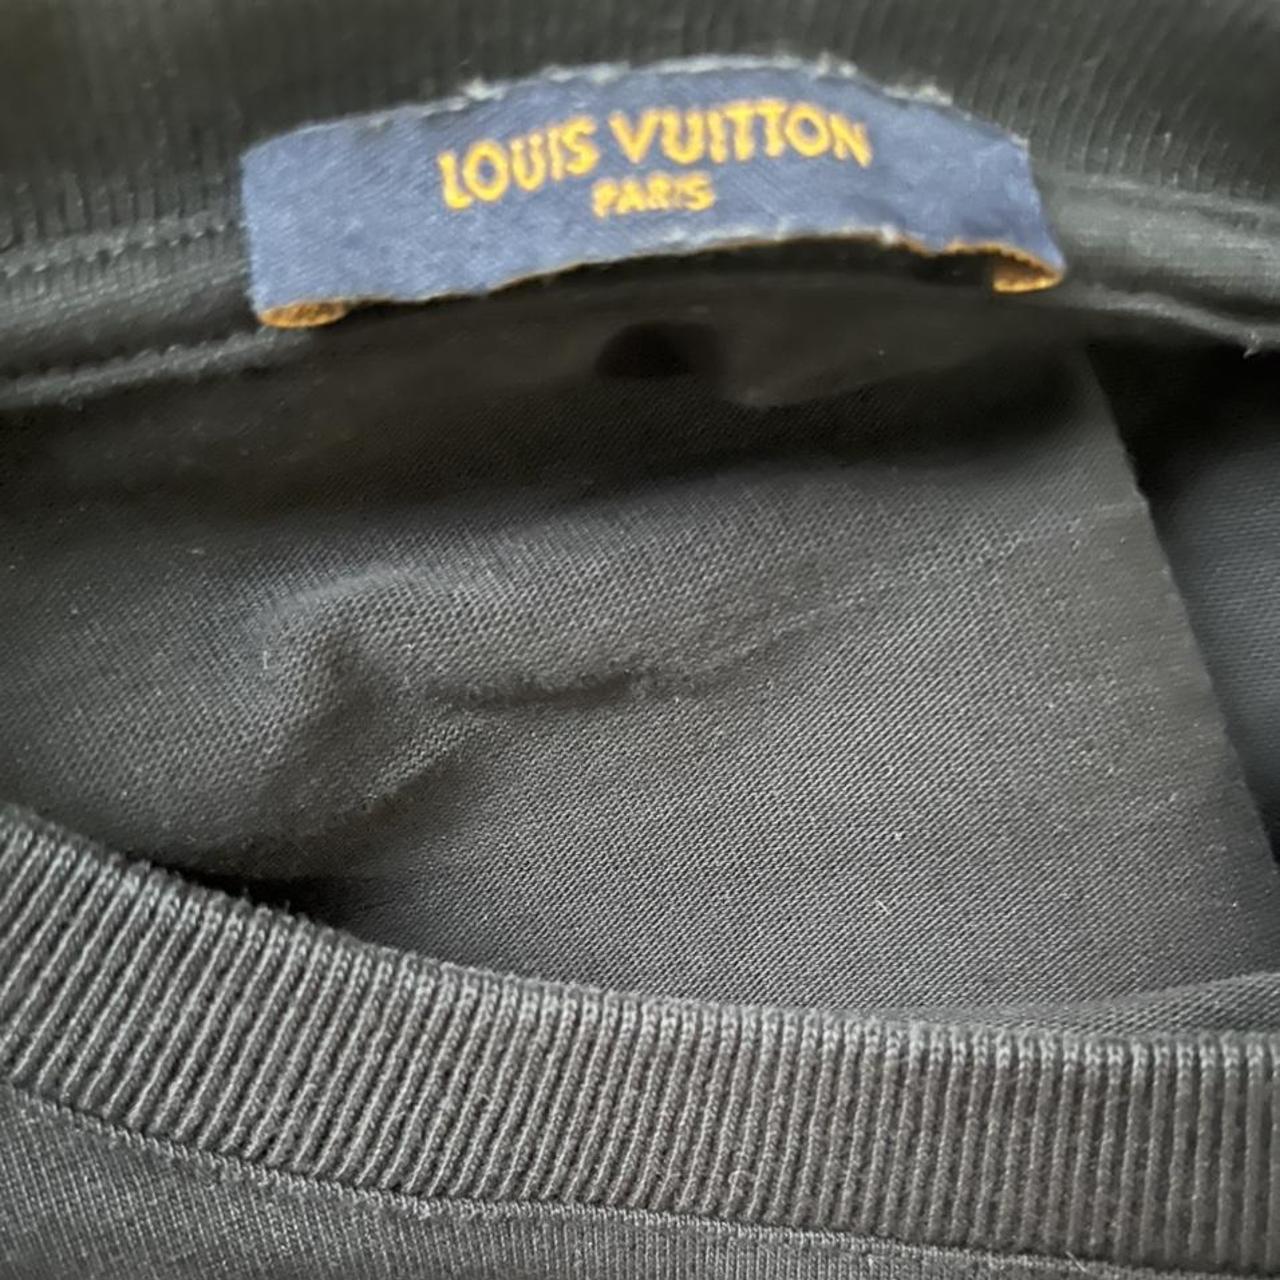 Louis Vuitton T-Shirt #LOUISVUITTON #VIRGILABLOH - Depop